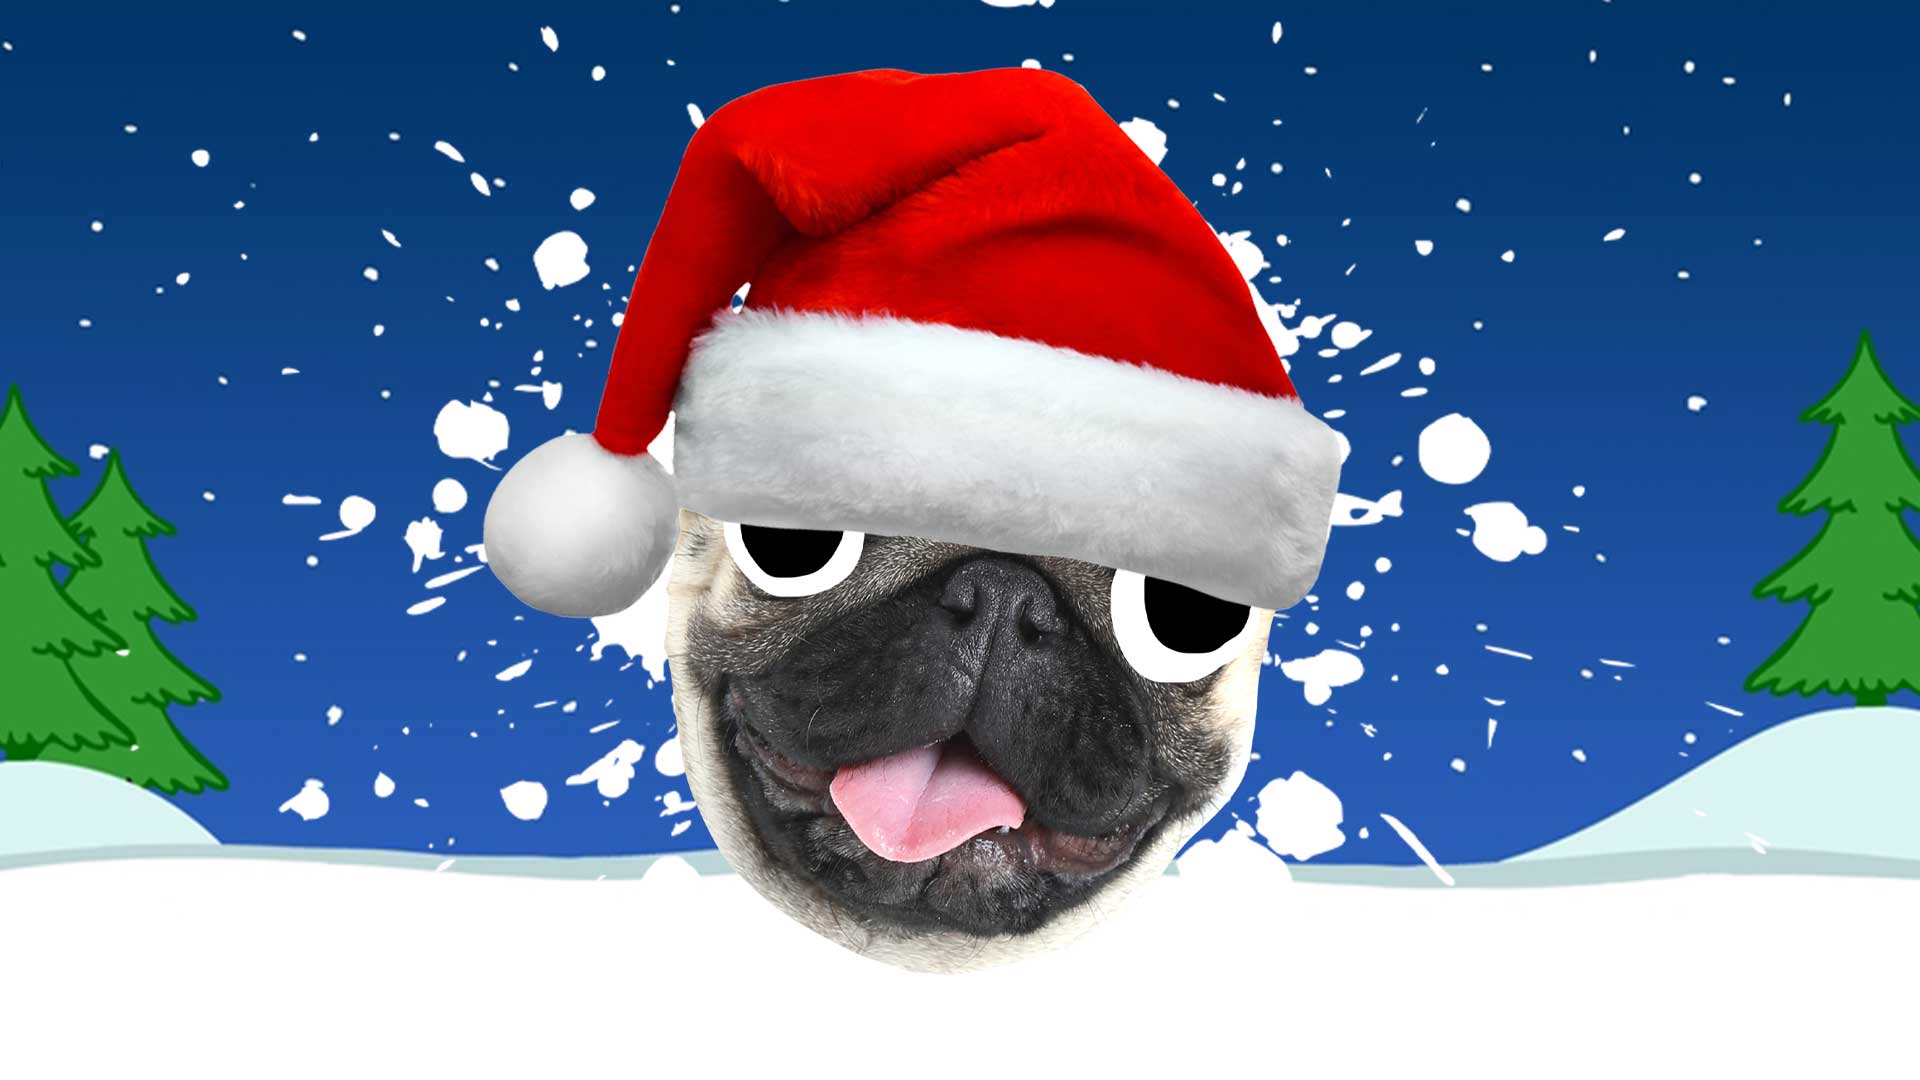 A pug enoying the holiday season